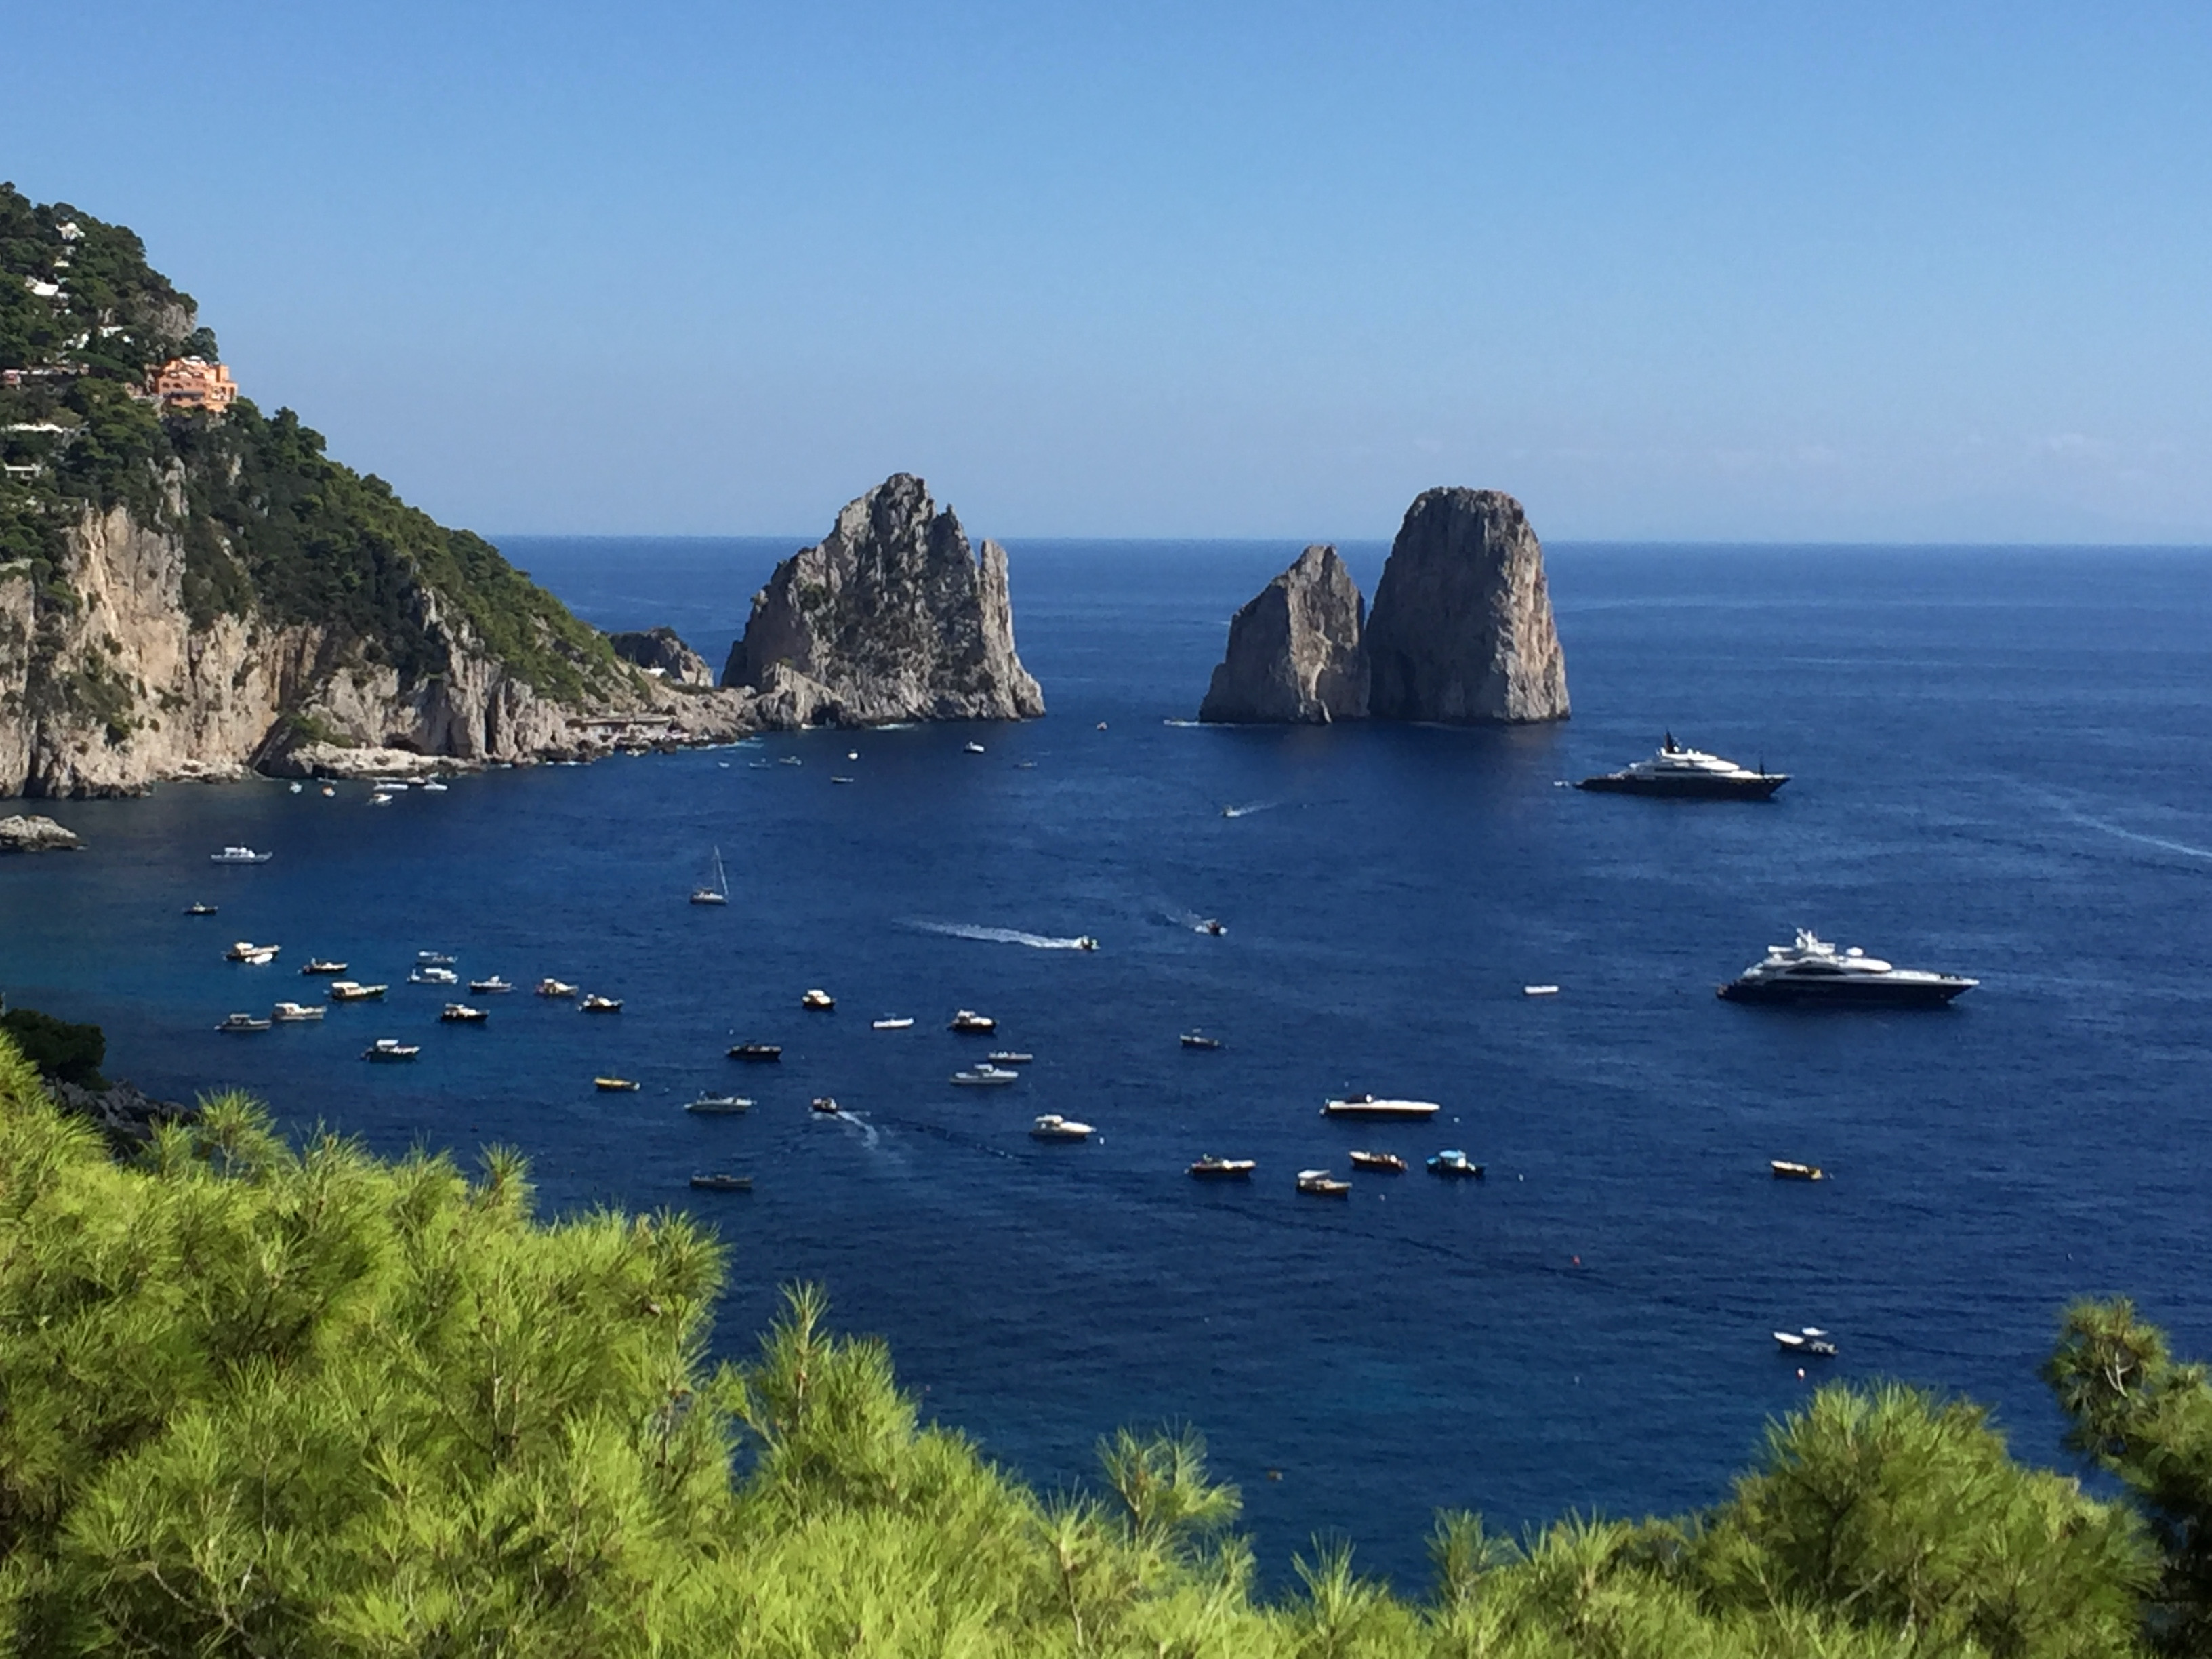 Island of Capri, Italy